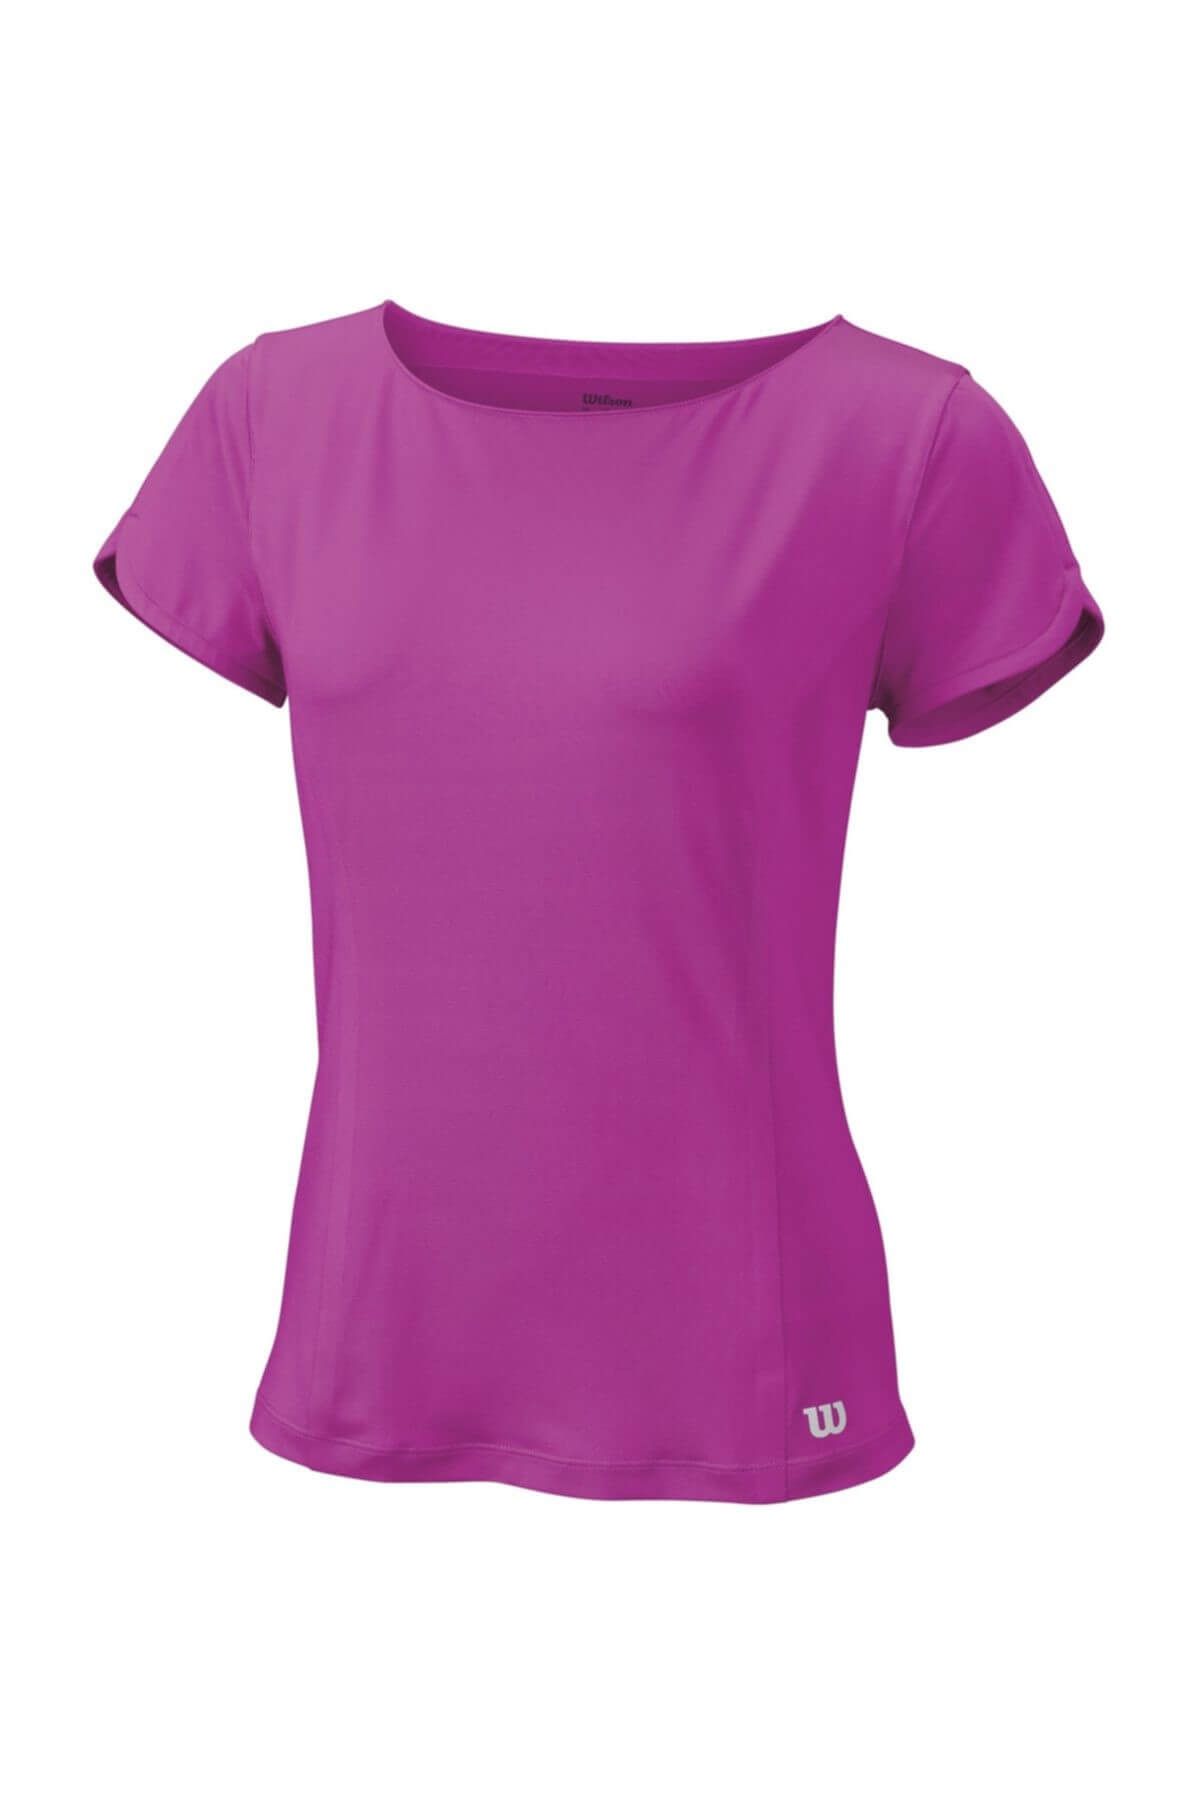 Wilson Kadın T-Shirt Star Crossover Cap Sleeve   Pembe (Rose Viol